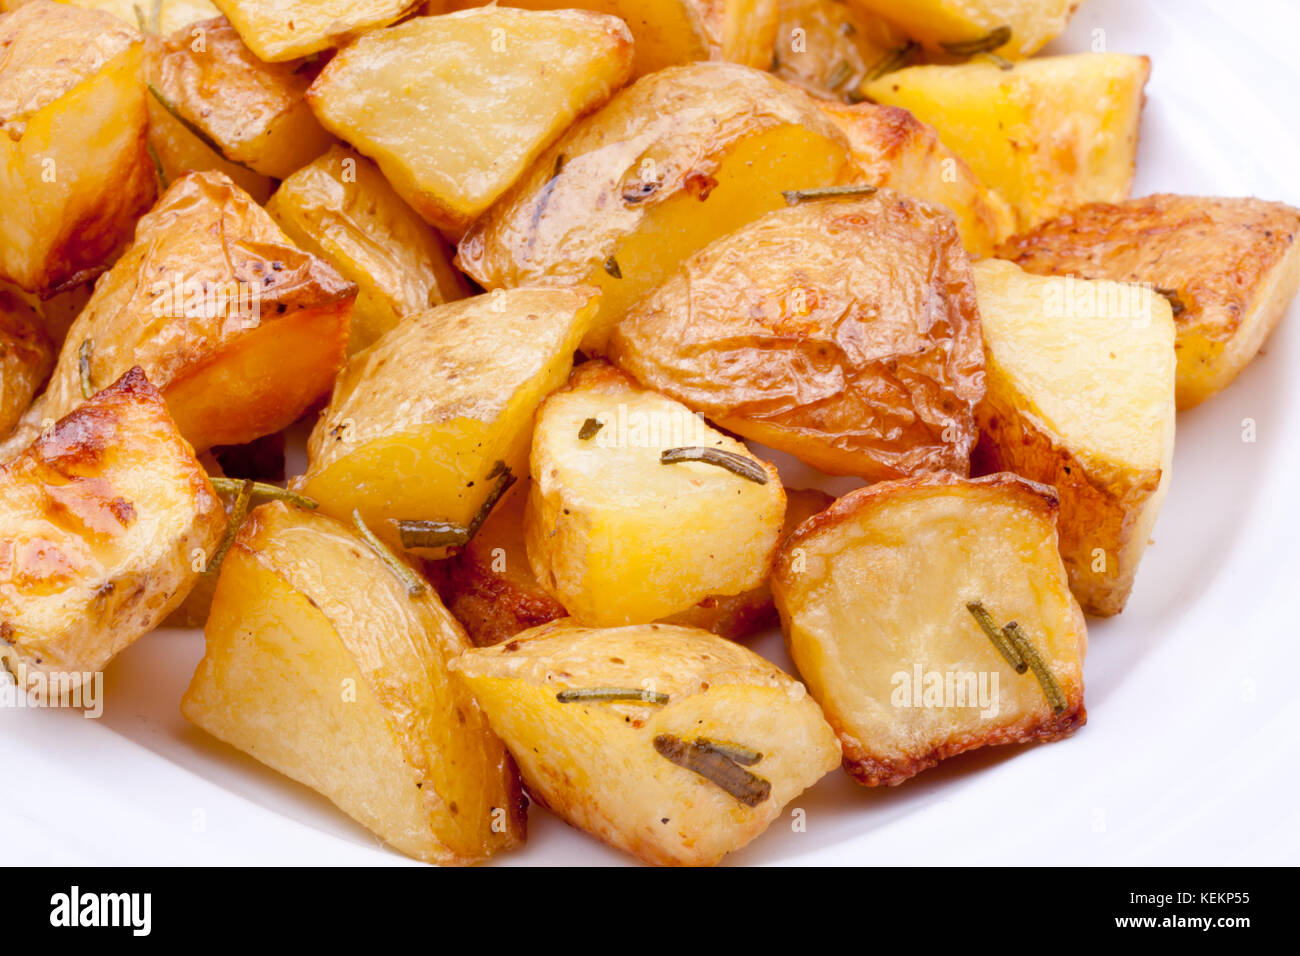 Roasted potato Stock Photo